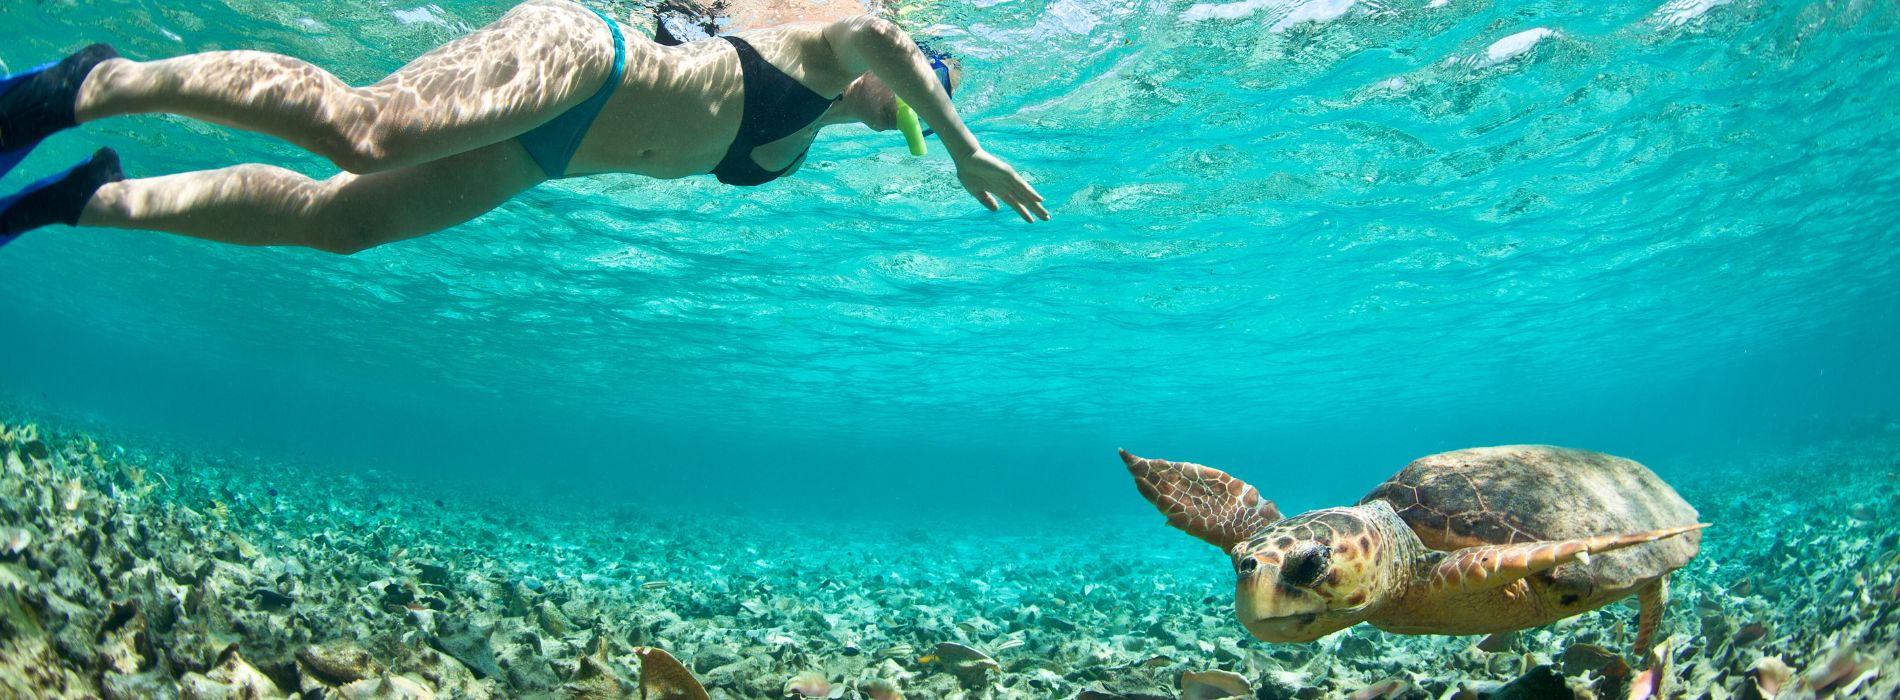 Snorkeling with Sea Turtles Hawaii